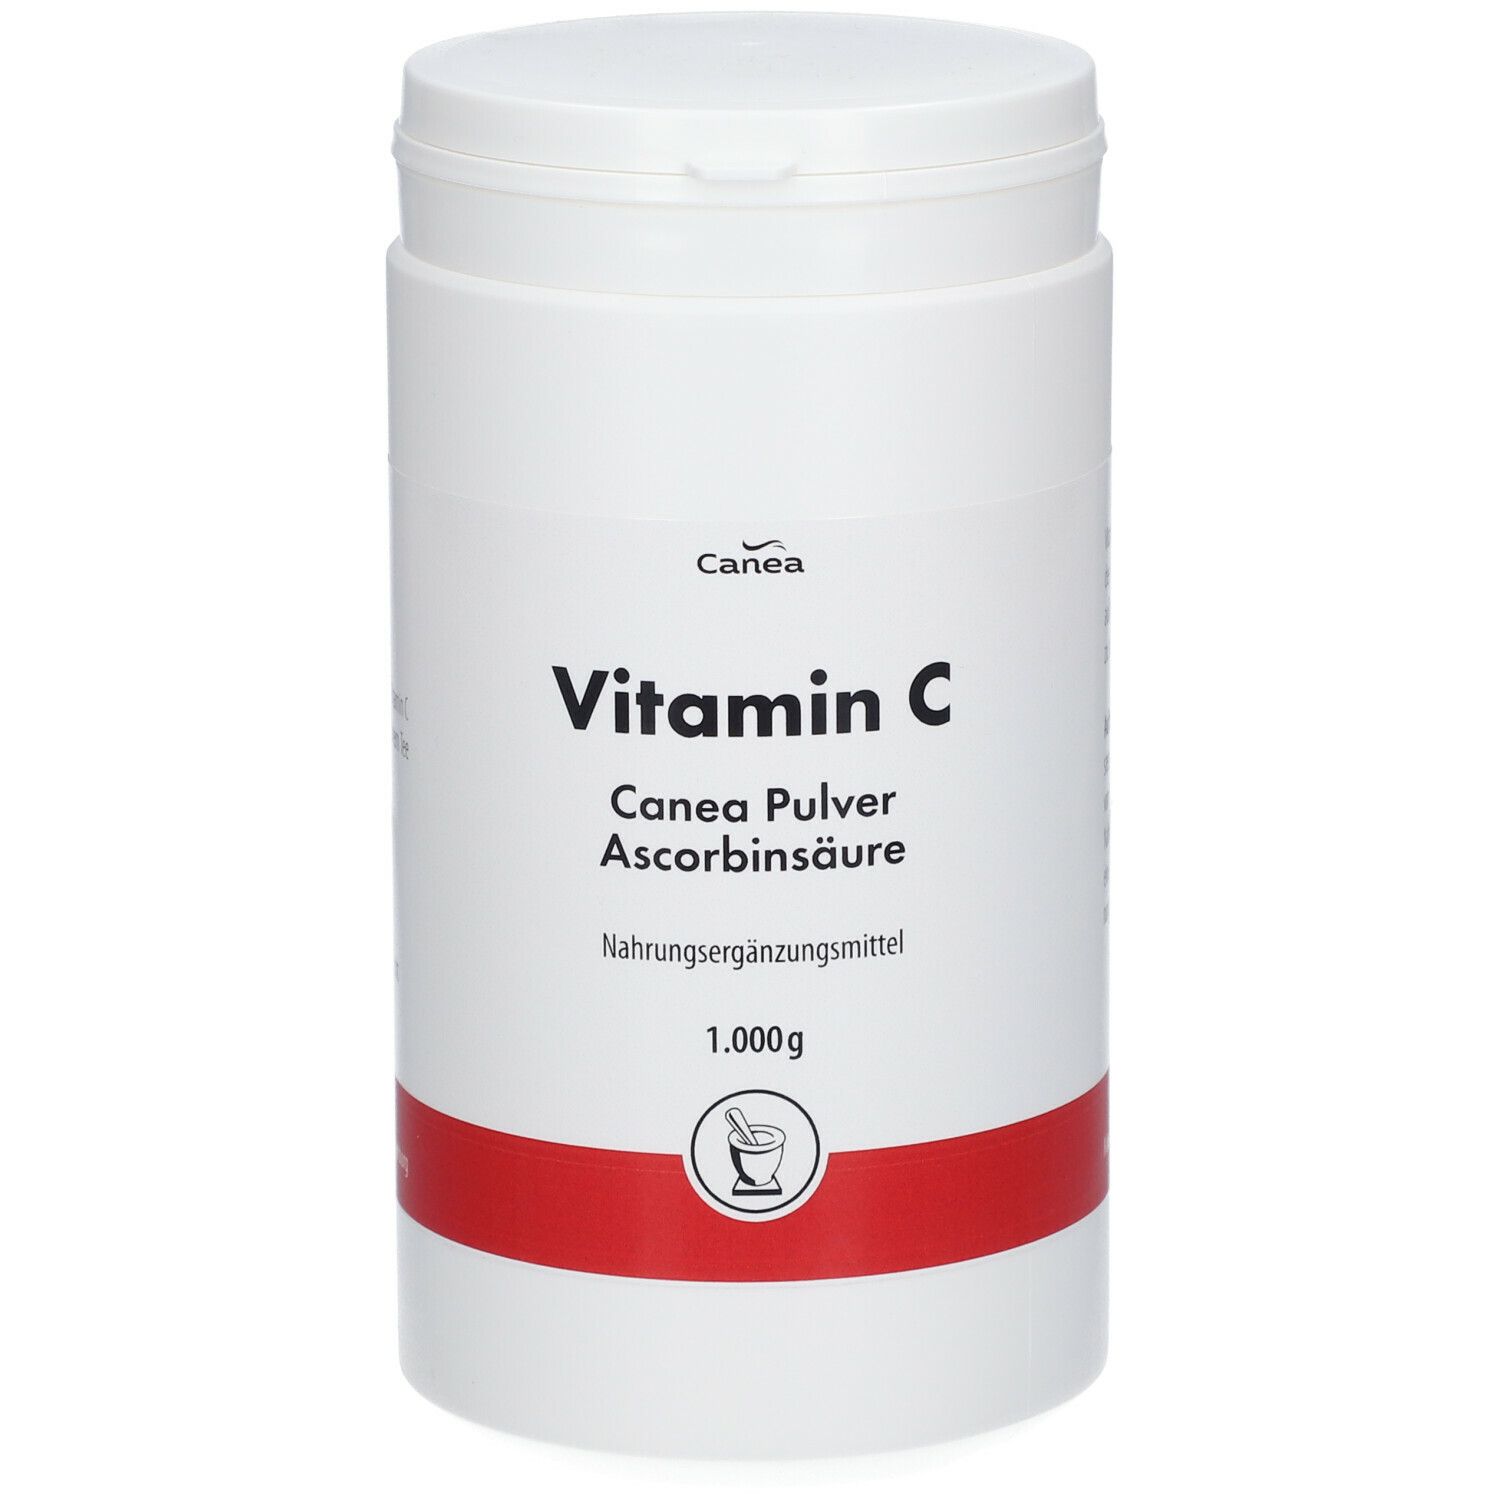 Vitamin C Canea Pulver